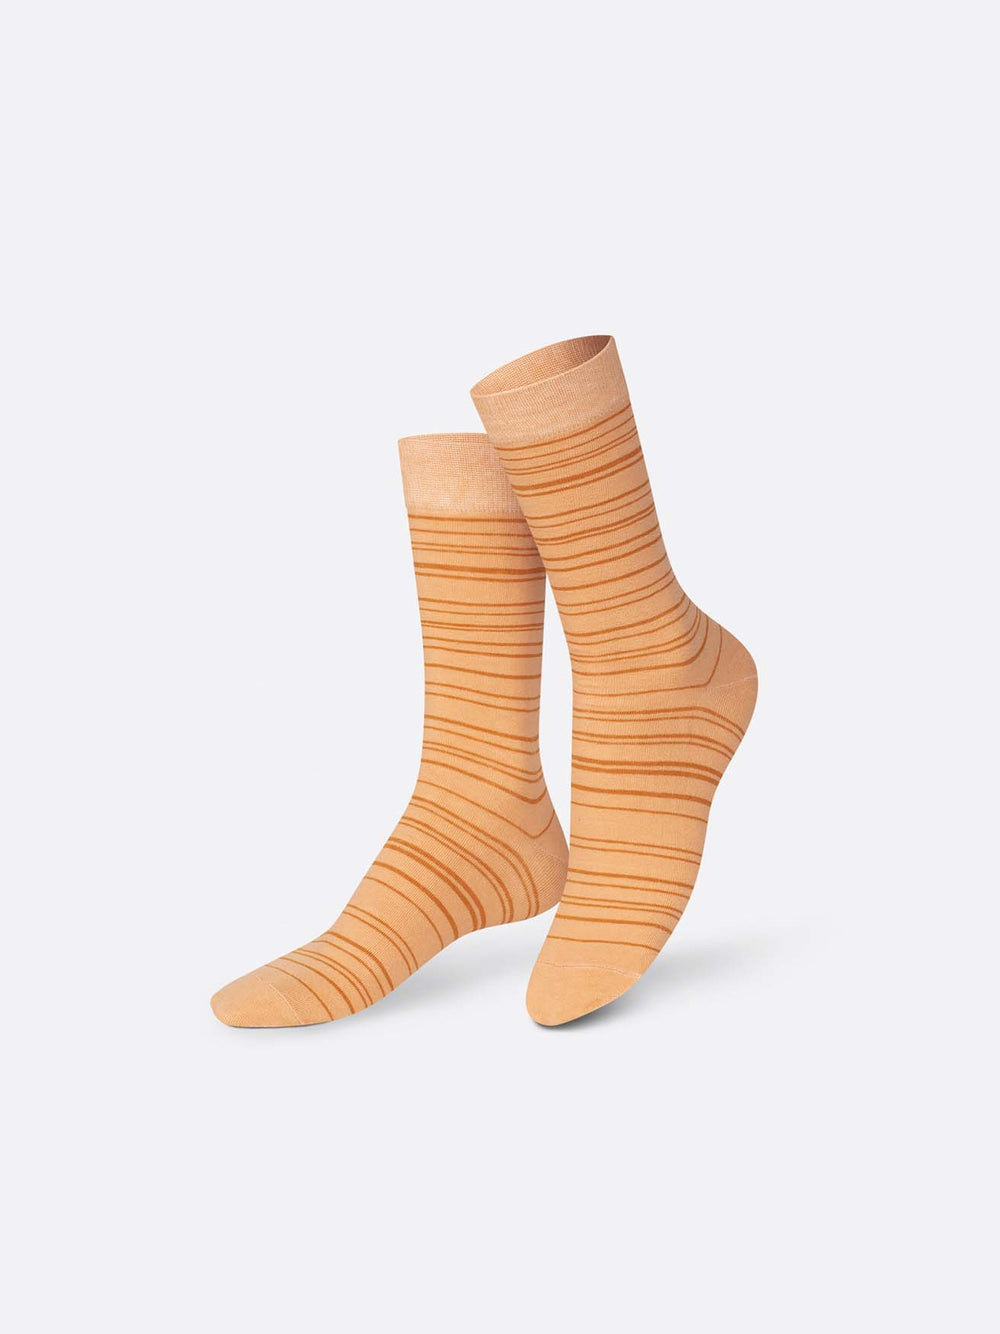 Bon Croissant Socks - #Perch#